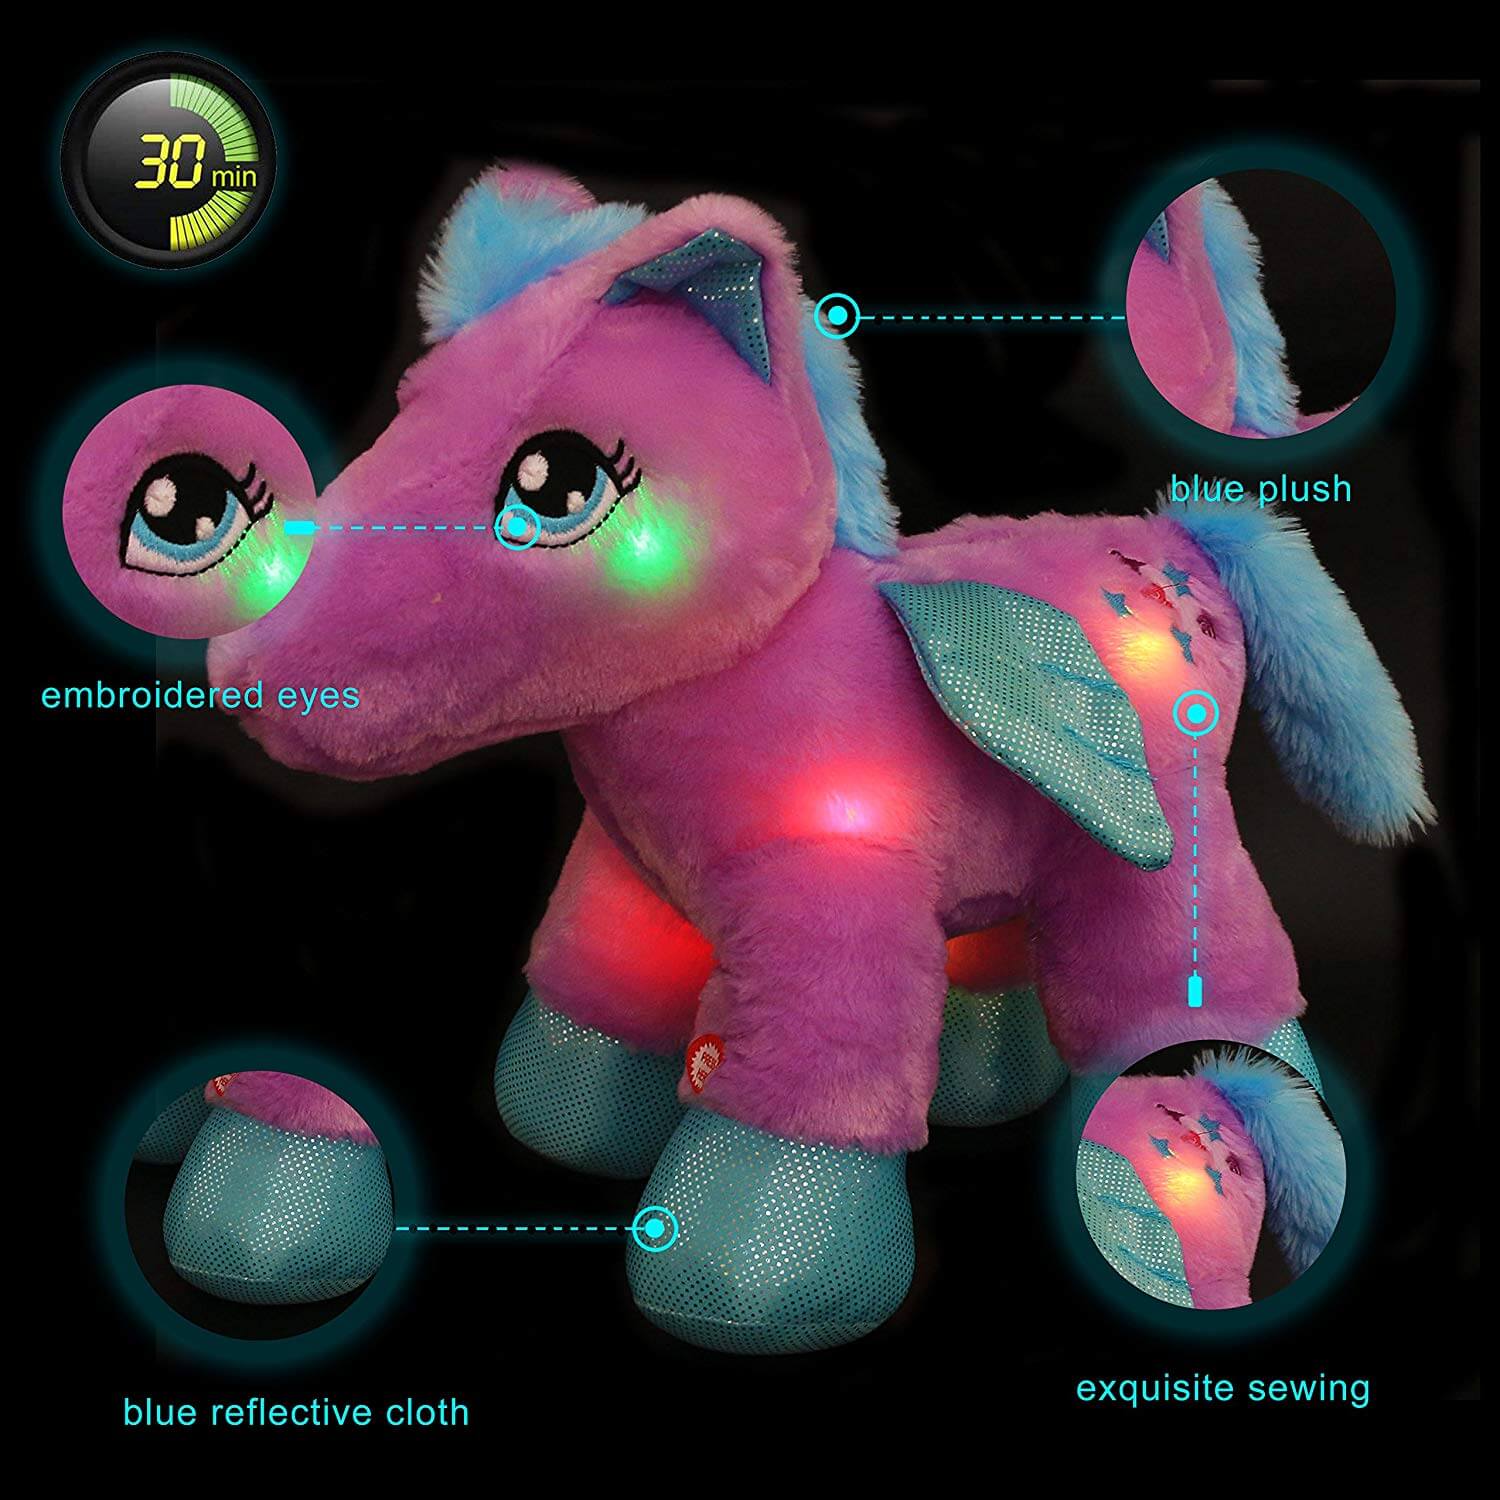 pegasus the unicorn LED stuffed animal, 11 inch | Bstaofy - Glow Guards